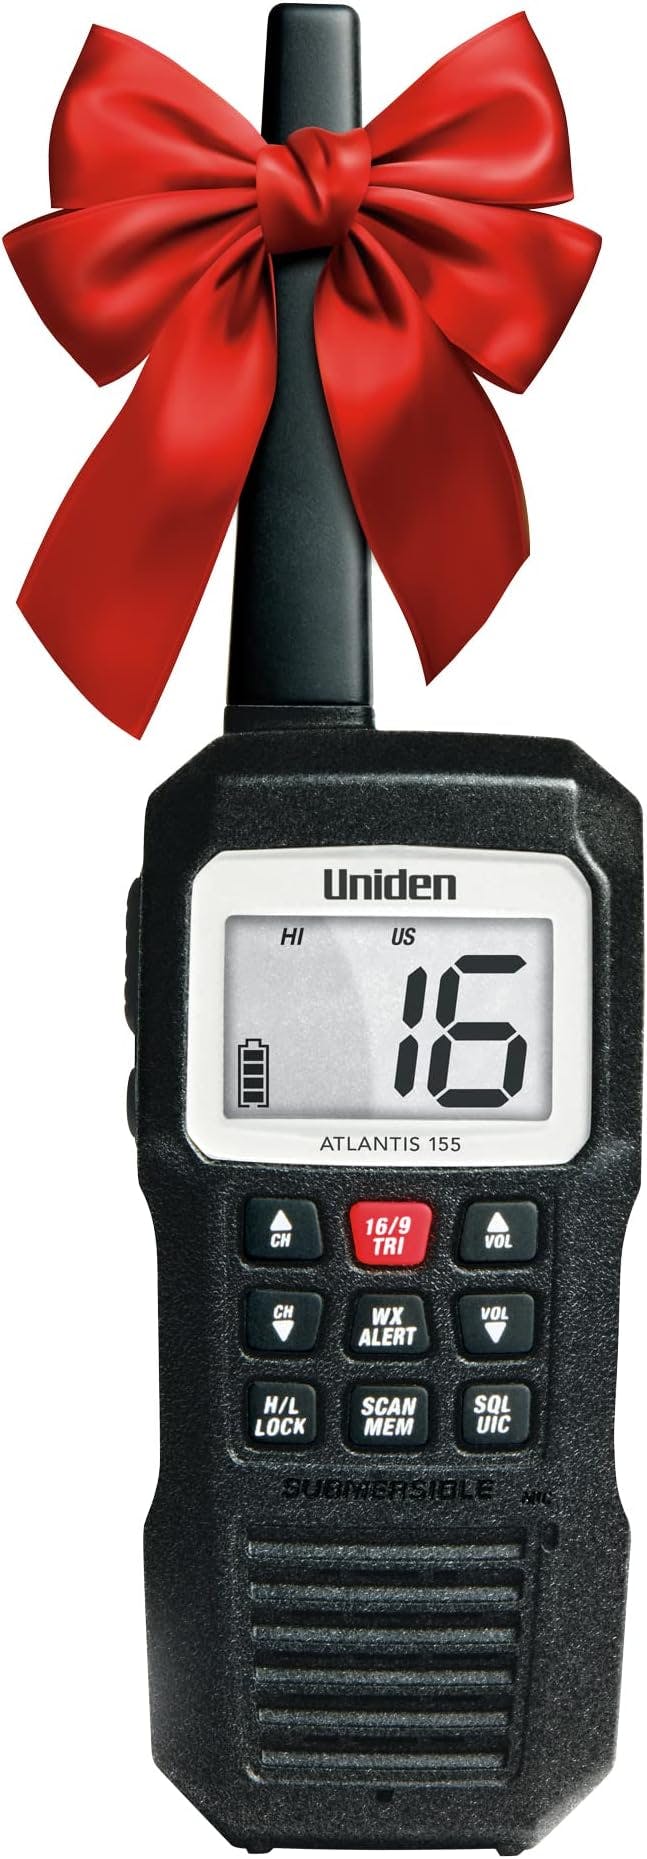 Uniden Atlantis 155: Waterproof Dual-Screen VHF Radio